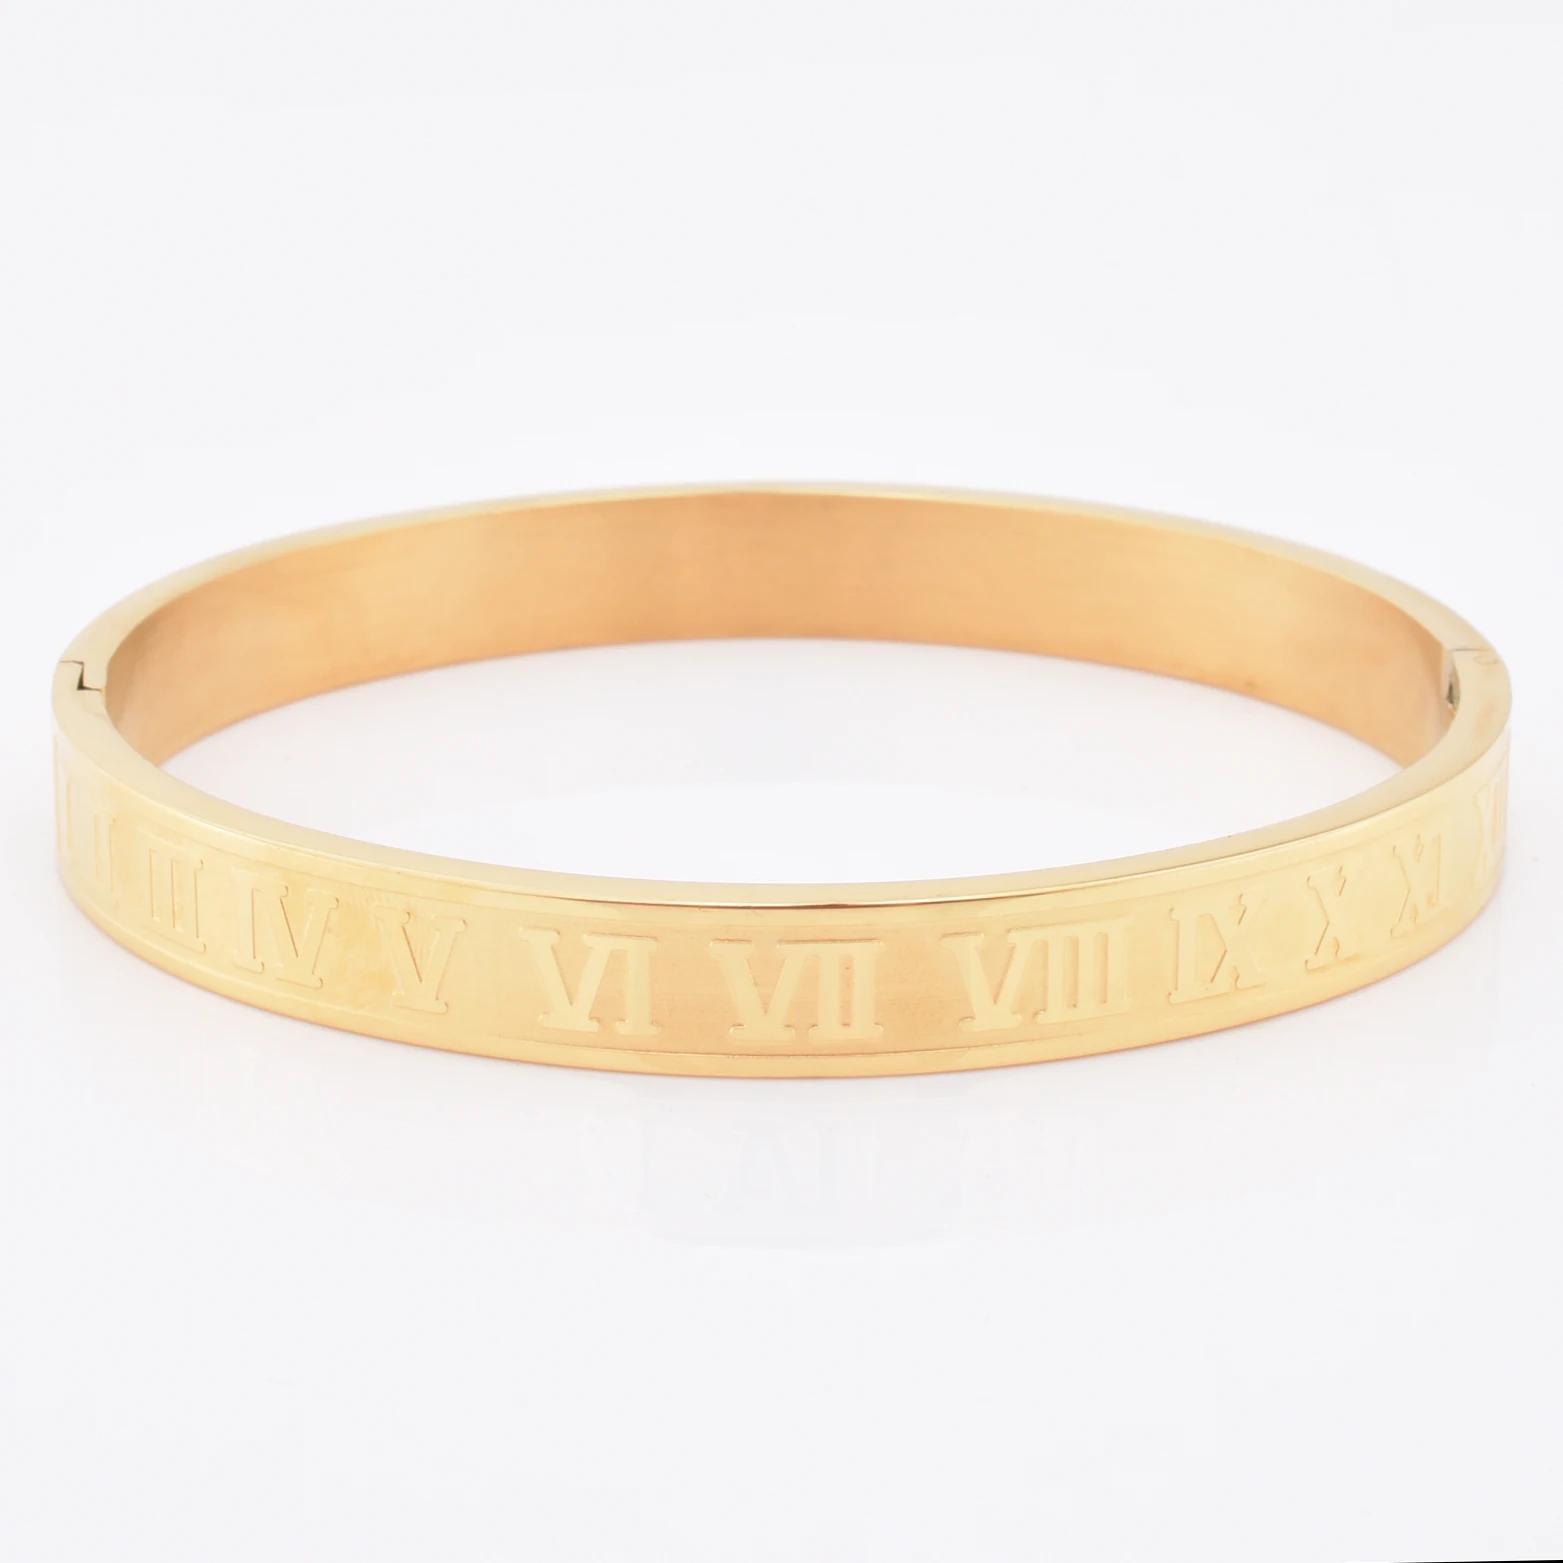 Gold Bracelet Man Saudi Design Thin Stainless Steel Sex Roman Numerals 8700